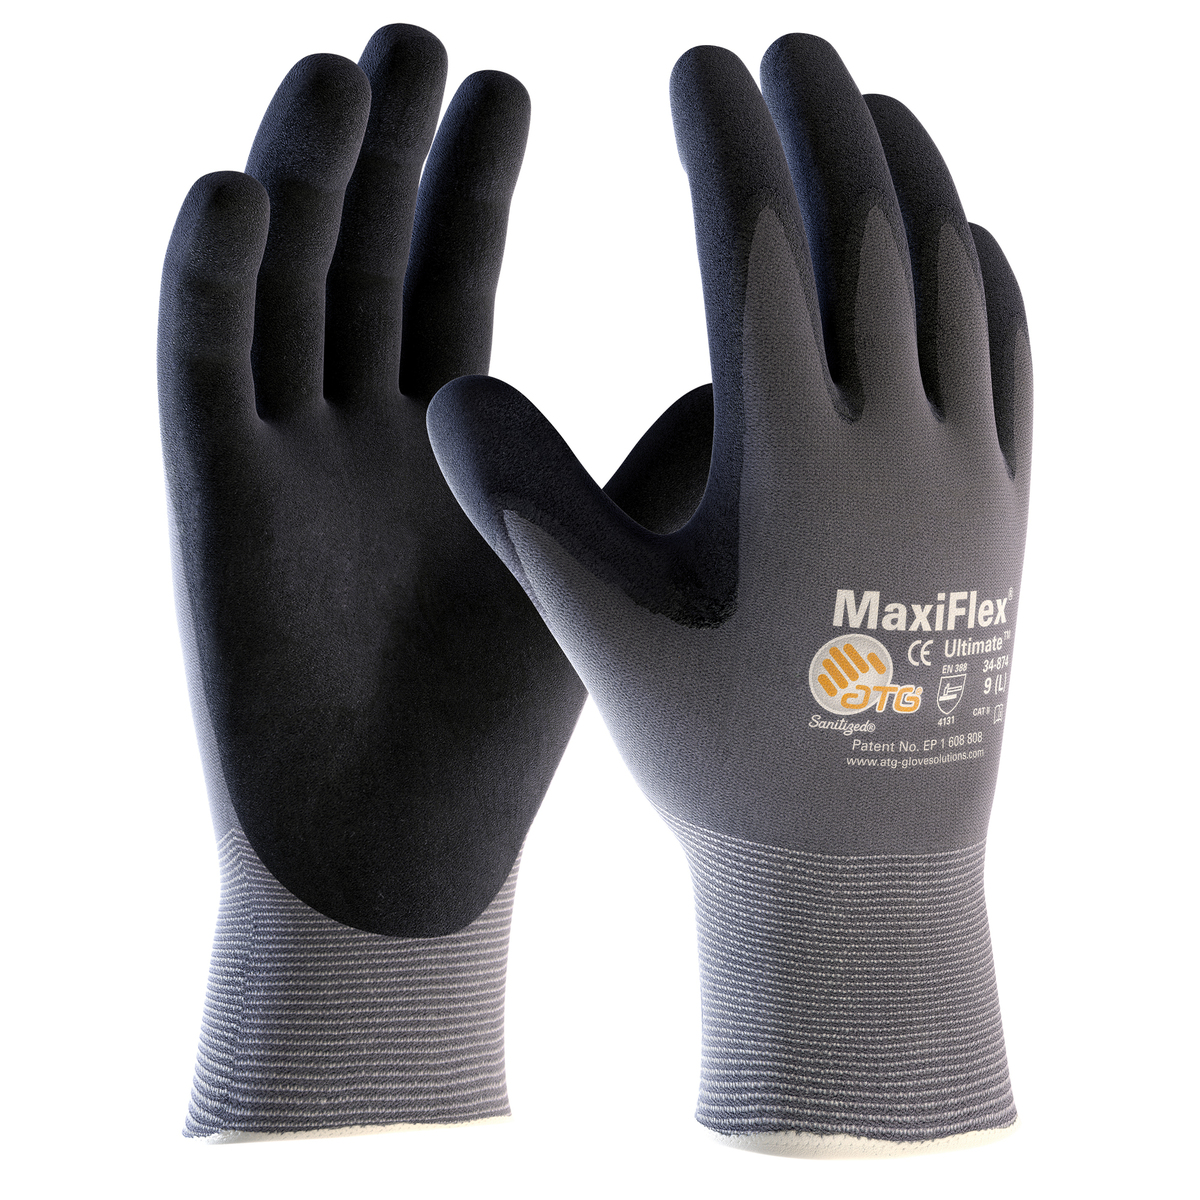 Coated Work Gloves For Sale Online